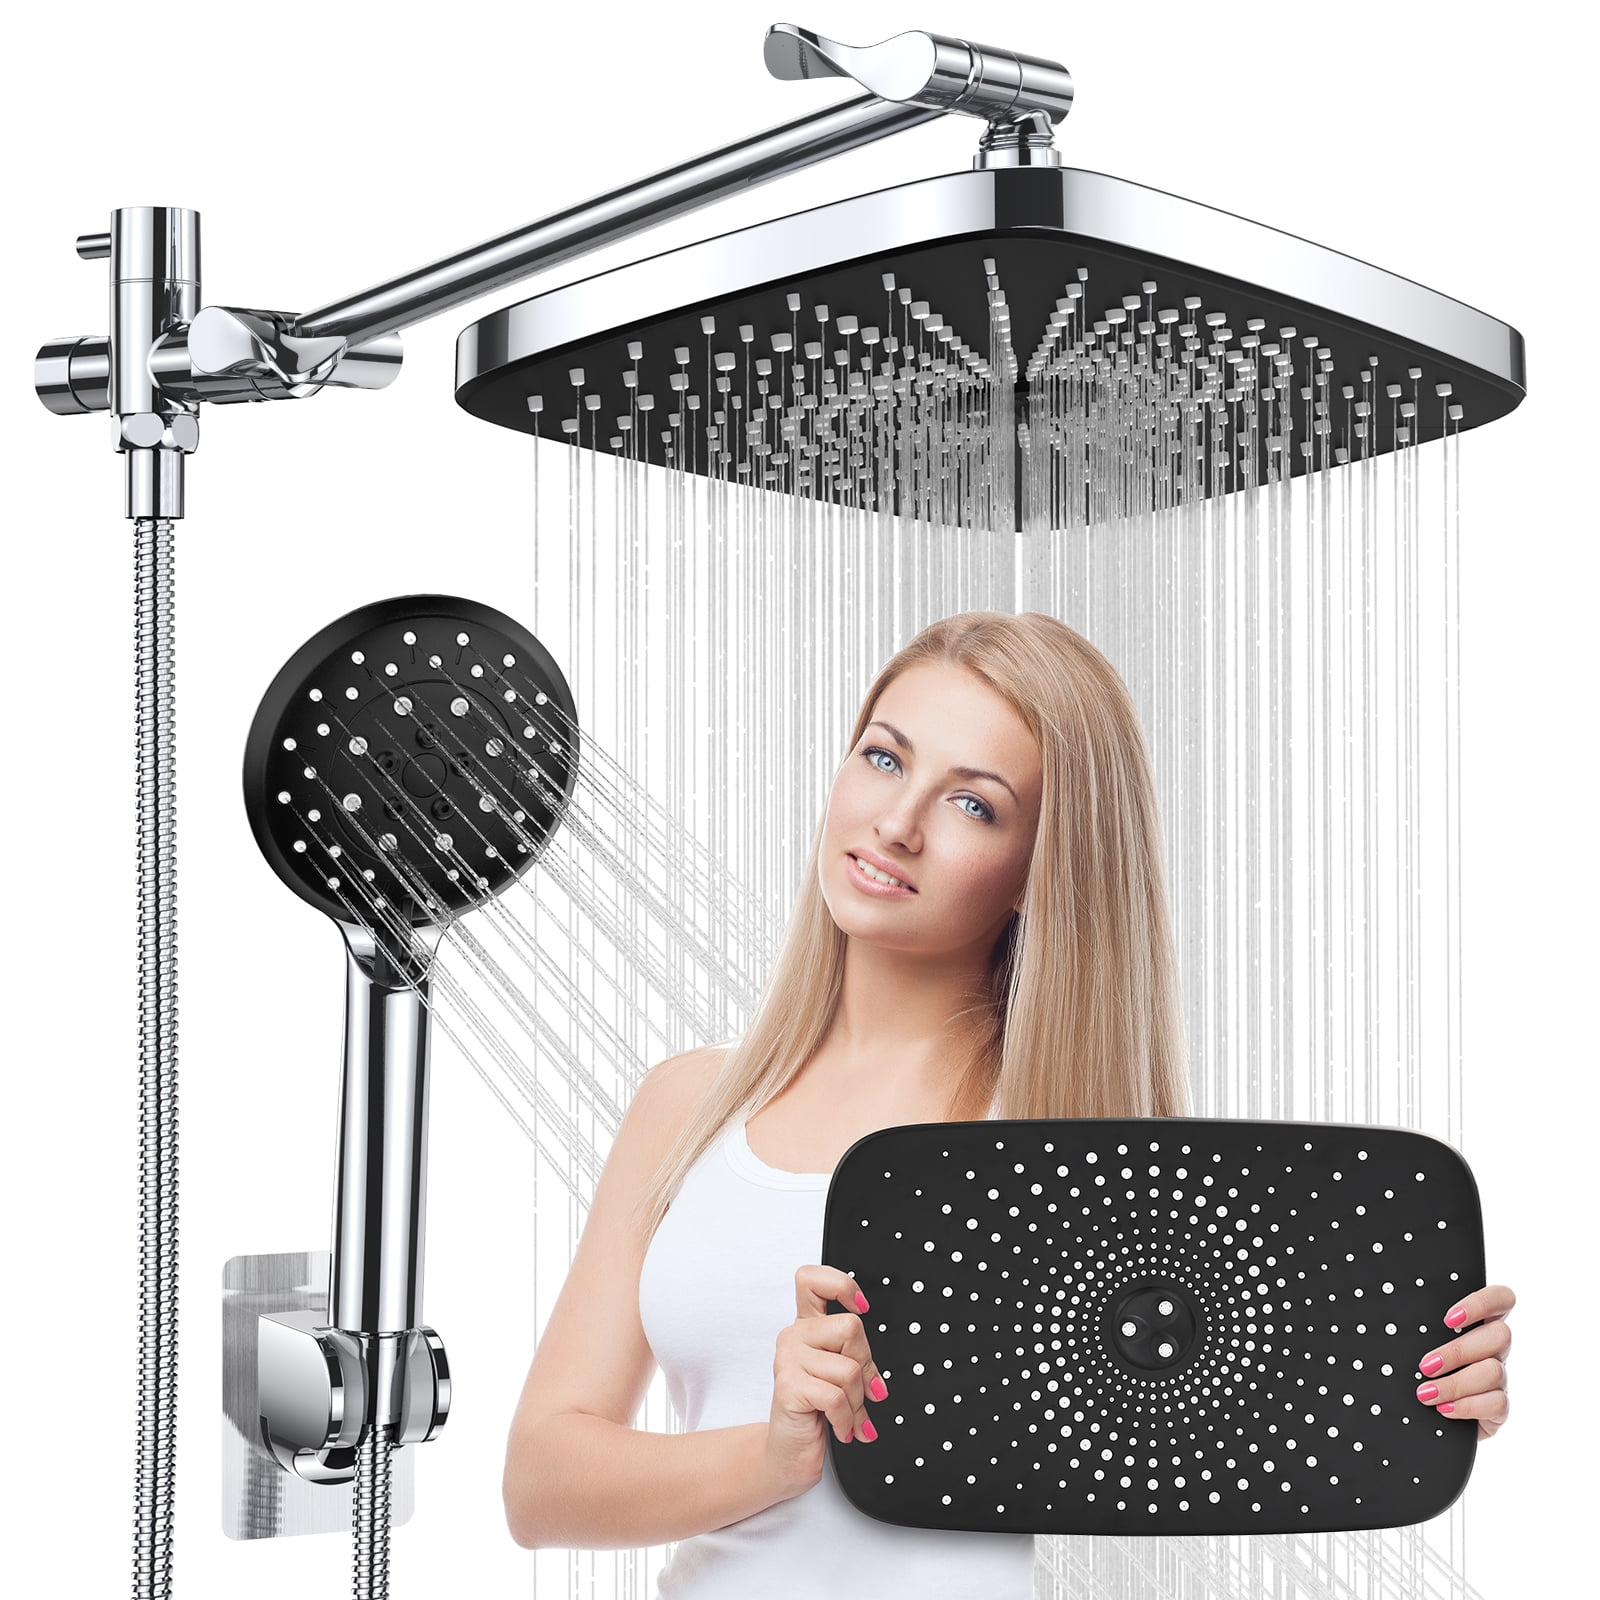 5-Setting High Pressure Shower Head, 12 inch Rain Shower Head with Handheld  and Hose,Chrome & Black